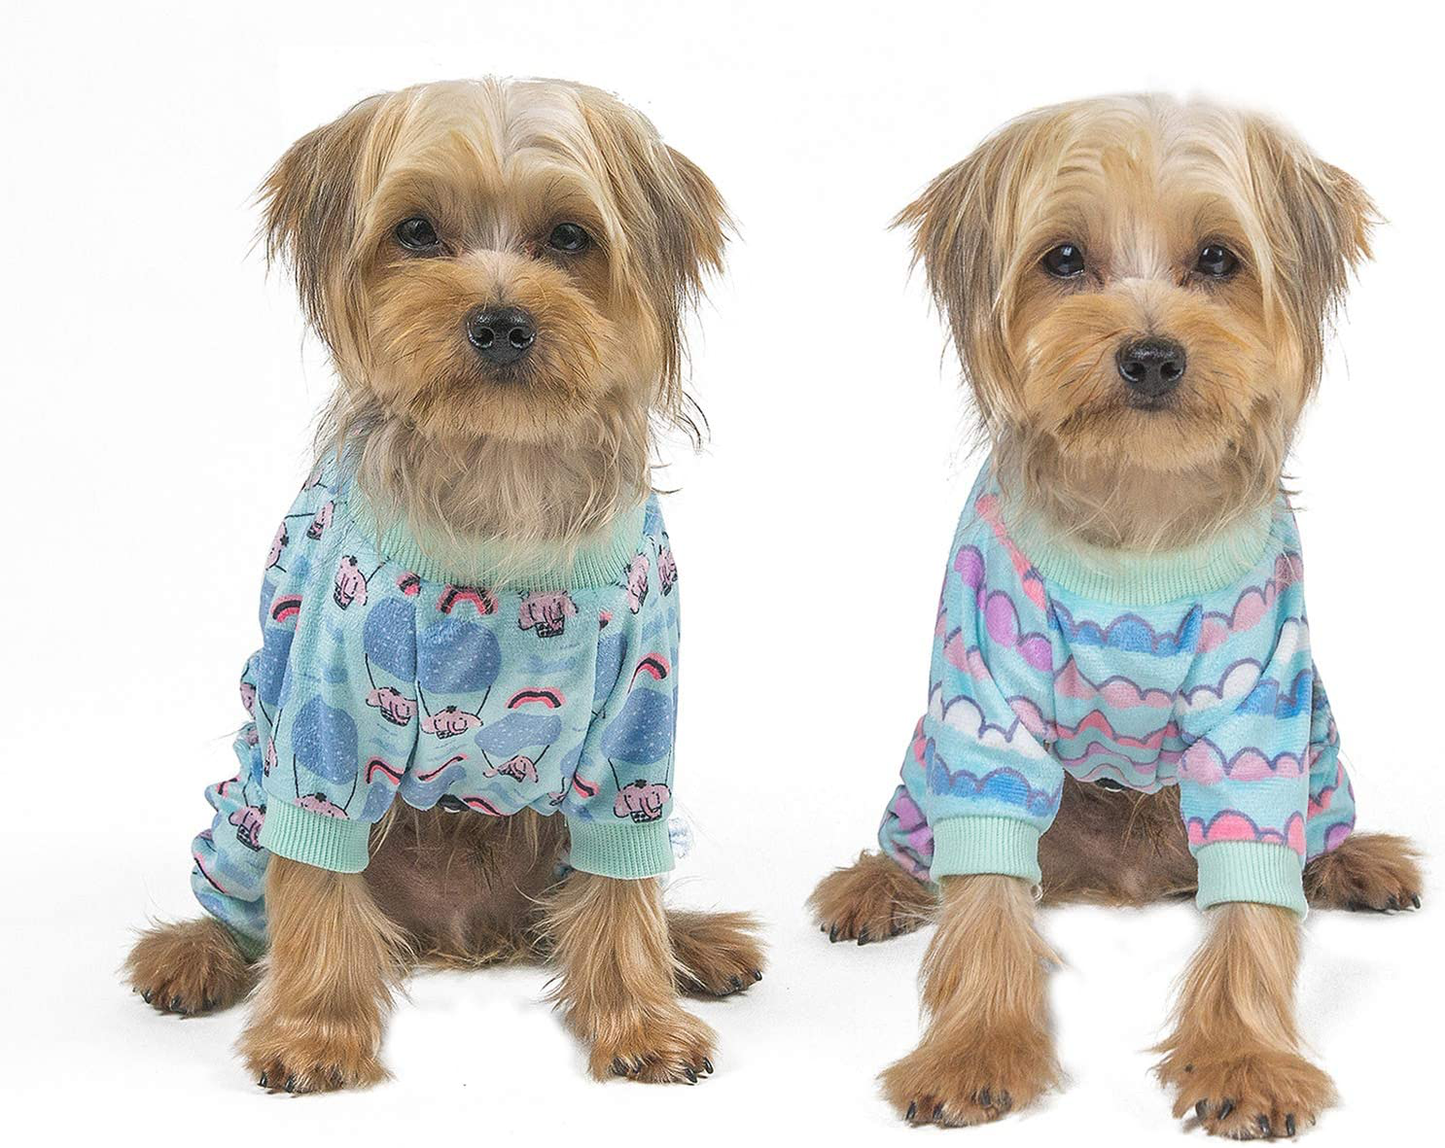 Cutebone Warm Dog Pajamas 2 Pack Cute Onesie for Medium Sized Dogs Boys&Girls Puppy Clothes